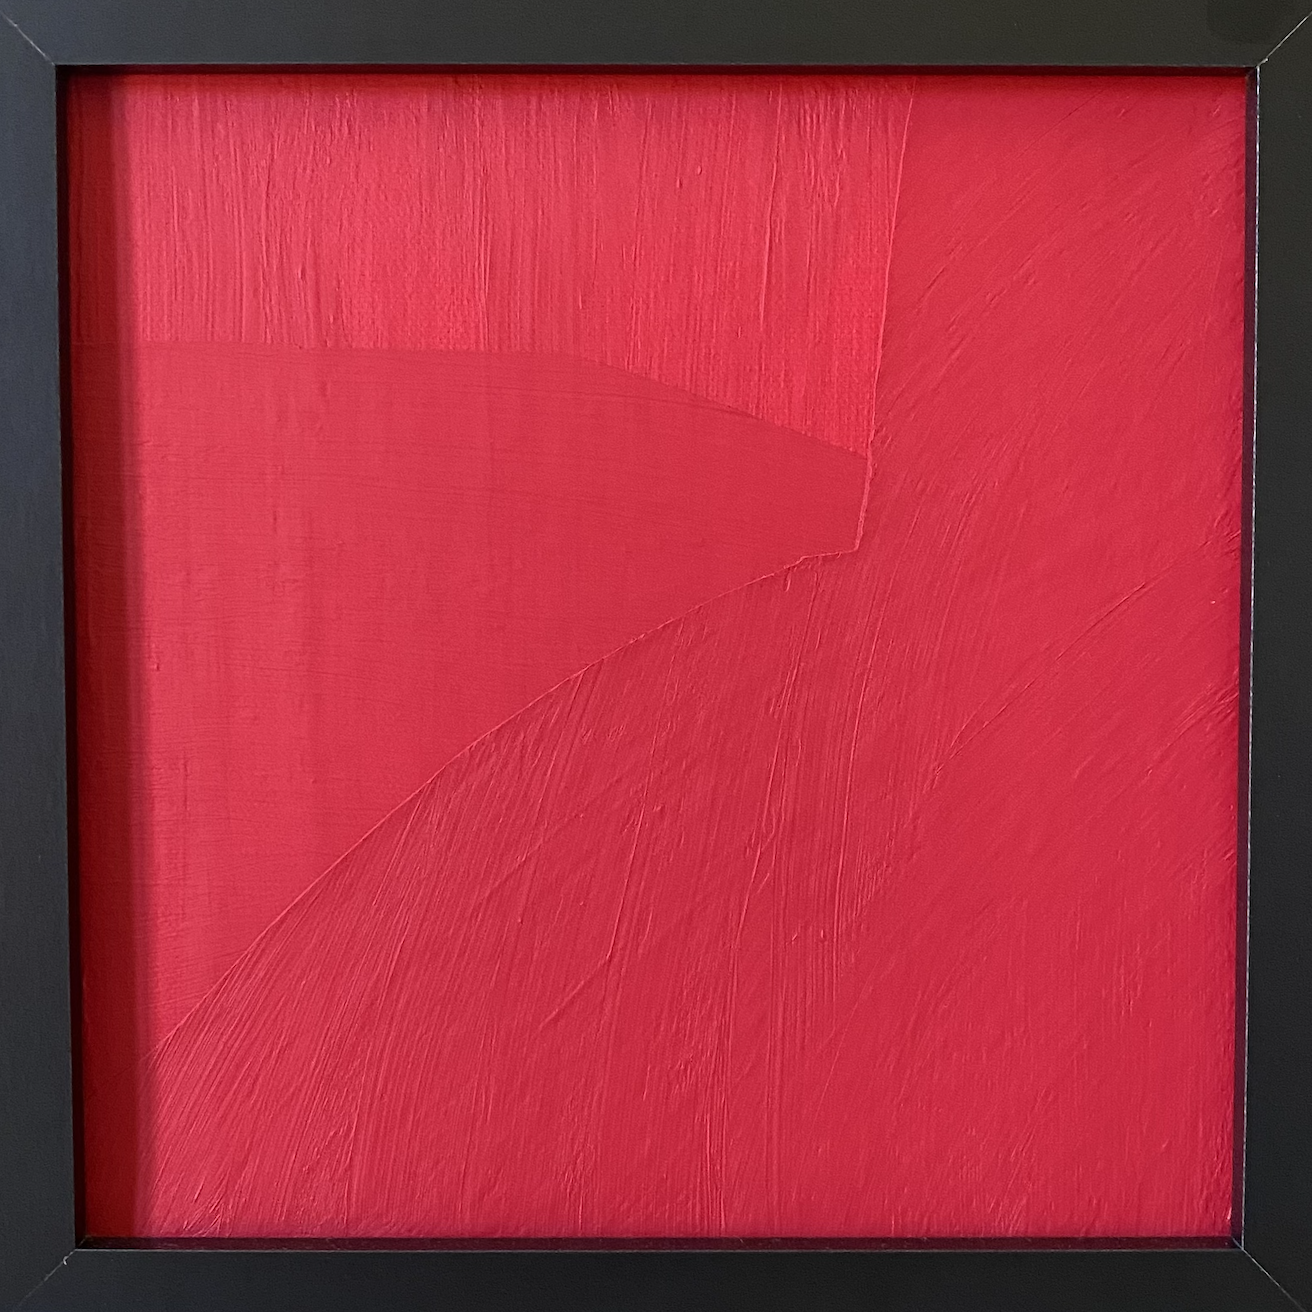 Primary breakdown - red monochrome